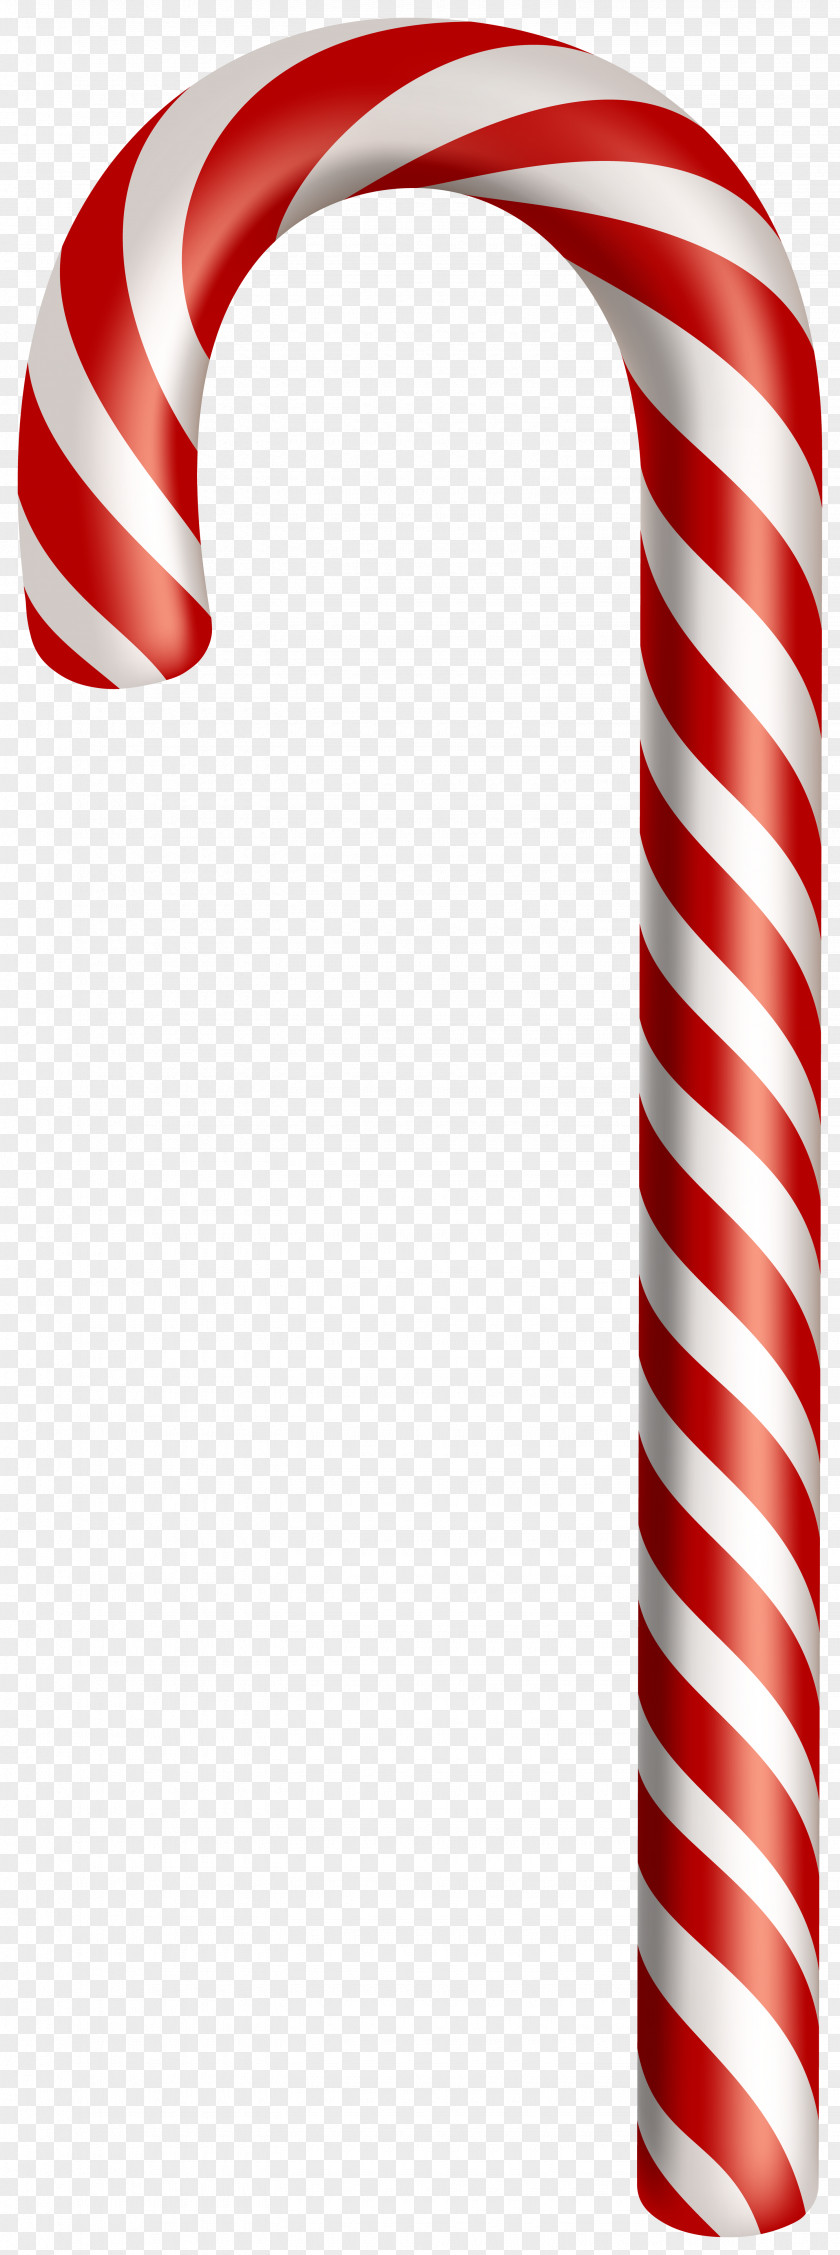 Lollipop Symbol Candy Cane Clip Art Christmas Image PNG